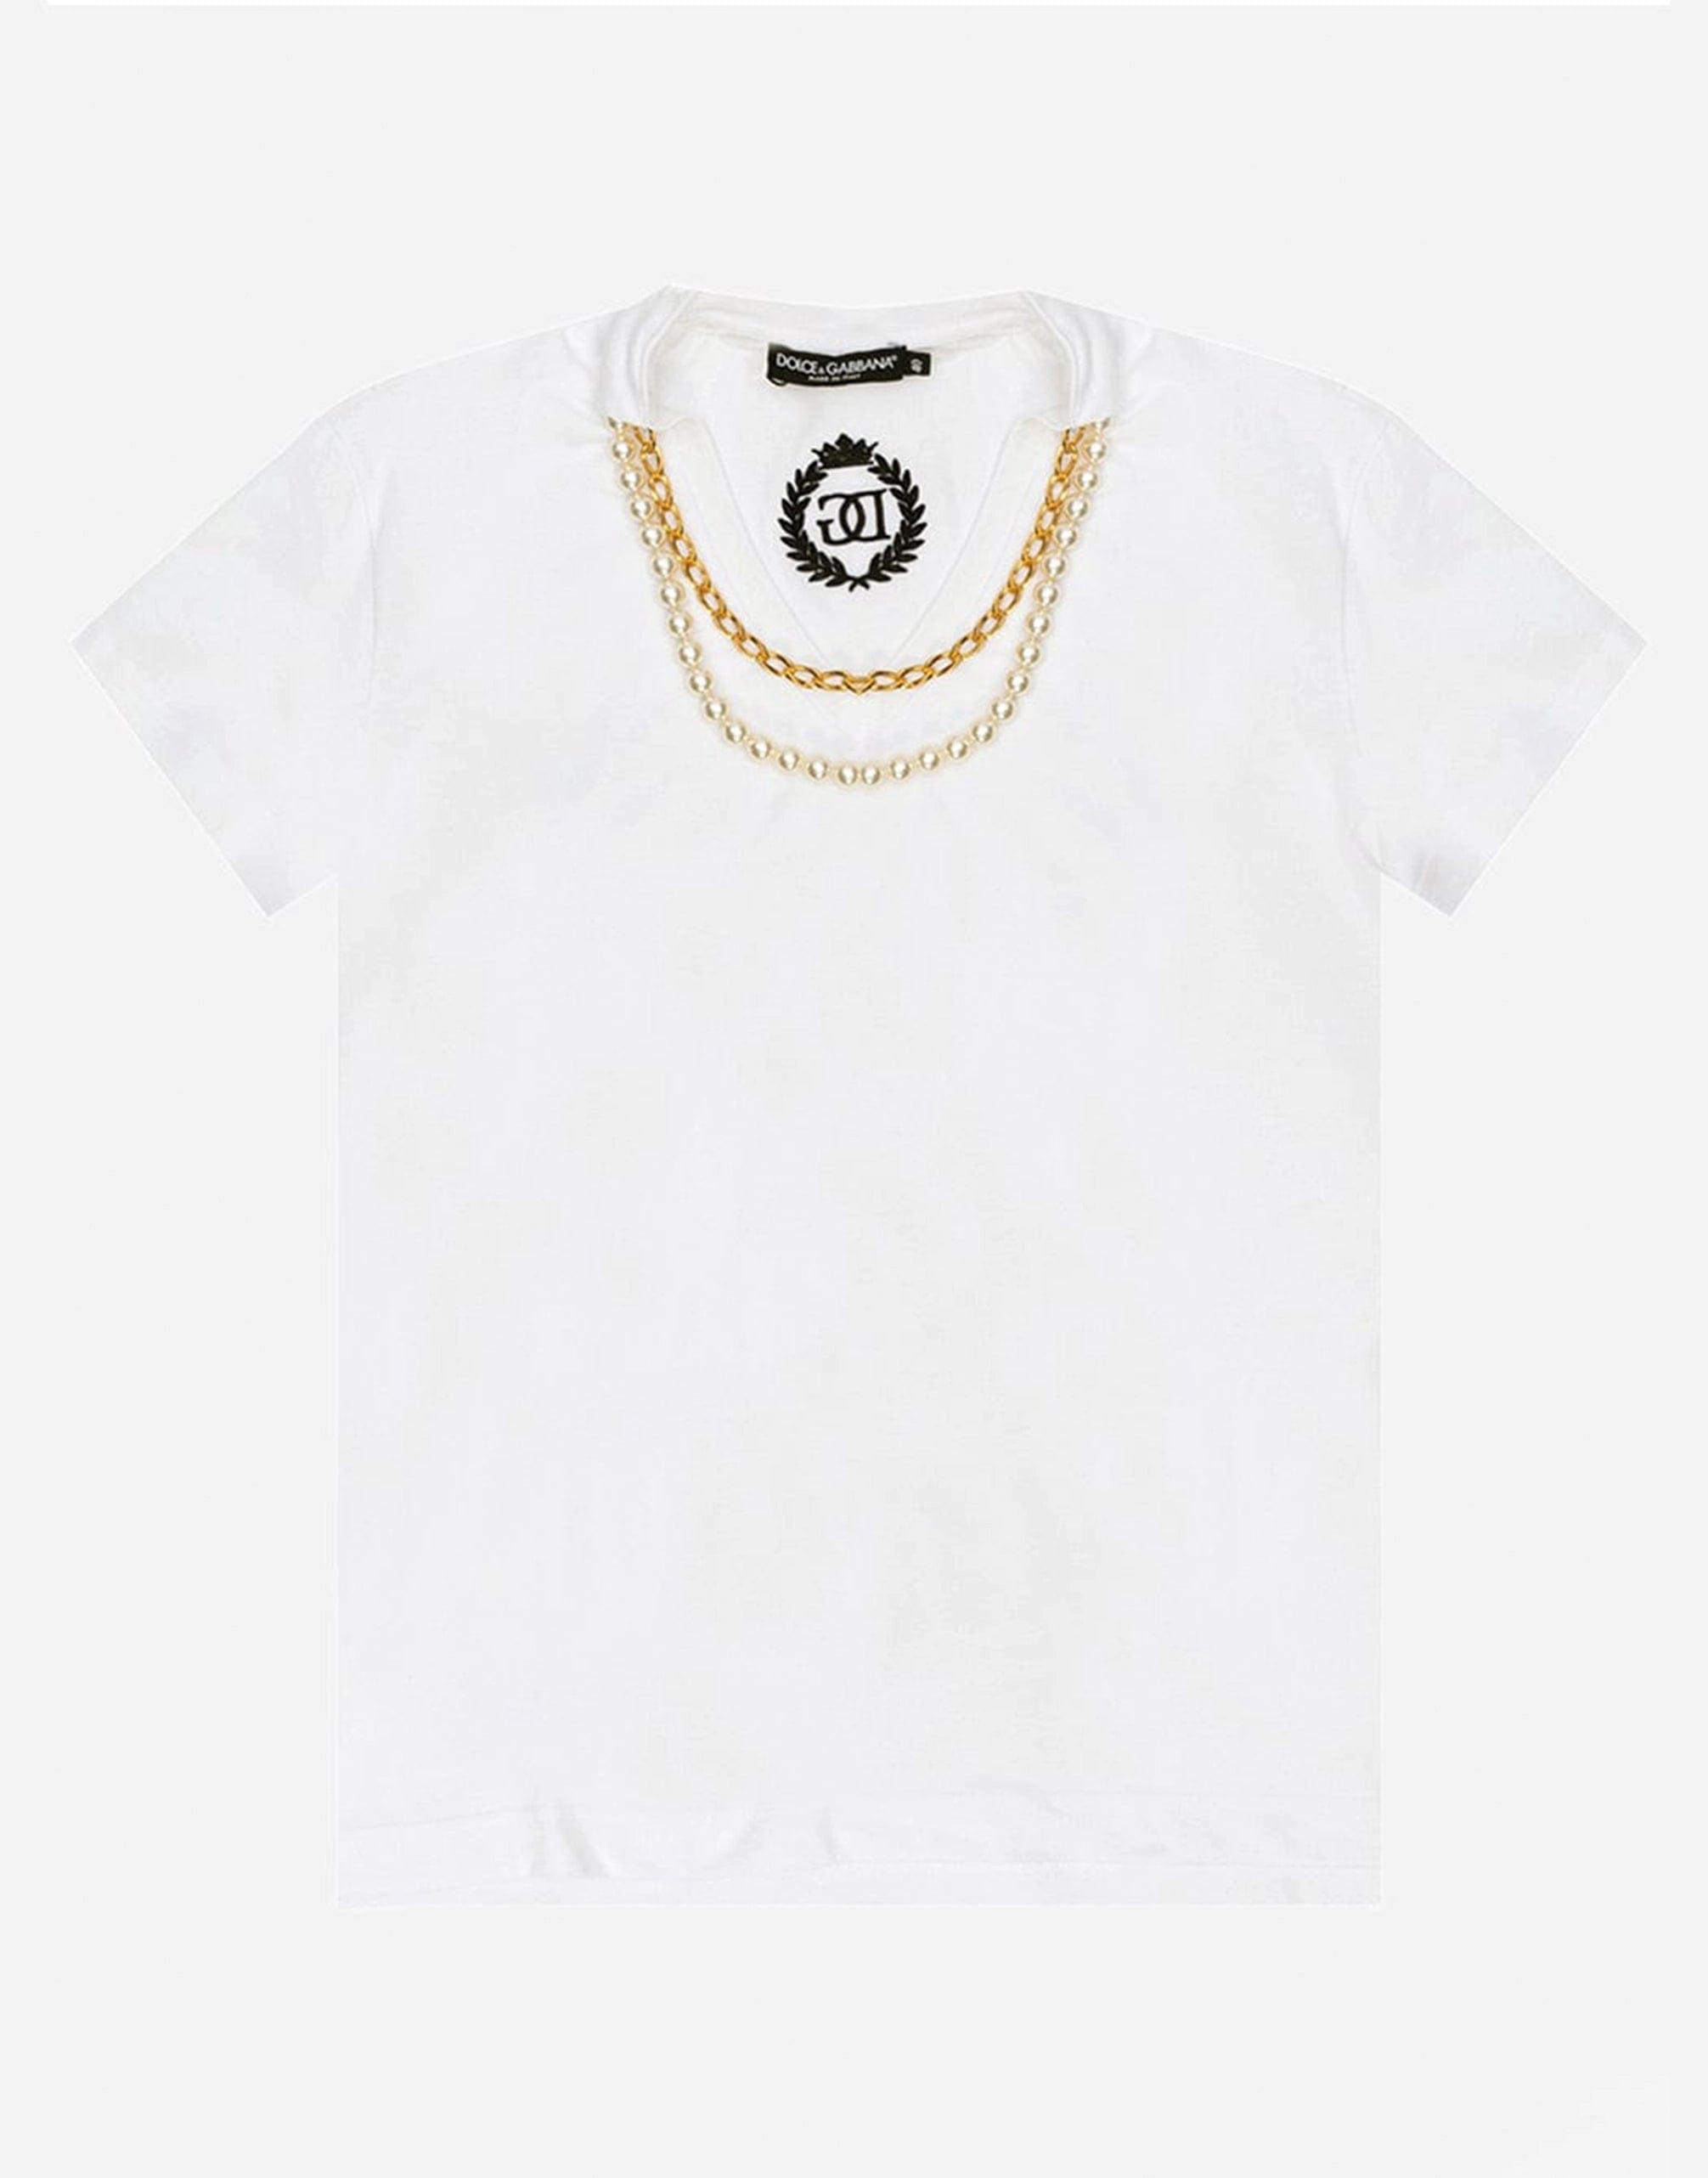 Dolce & Gabbana Pearl Necklace T-Shirt